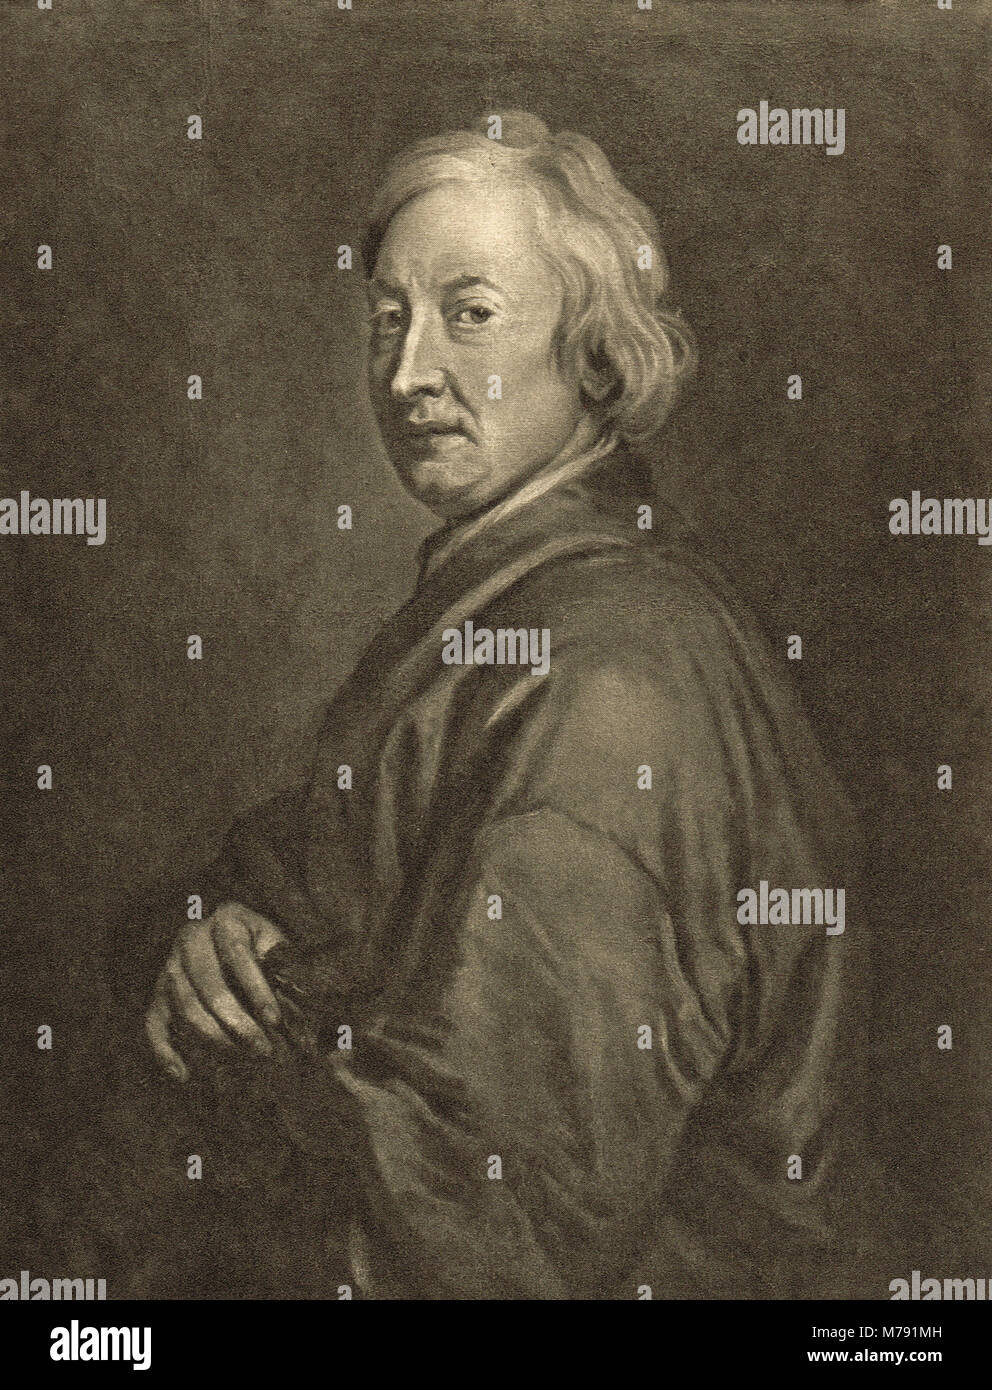 John Dryden, Inglaterra primer poeta laureado en 1668 Foto de stock